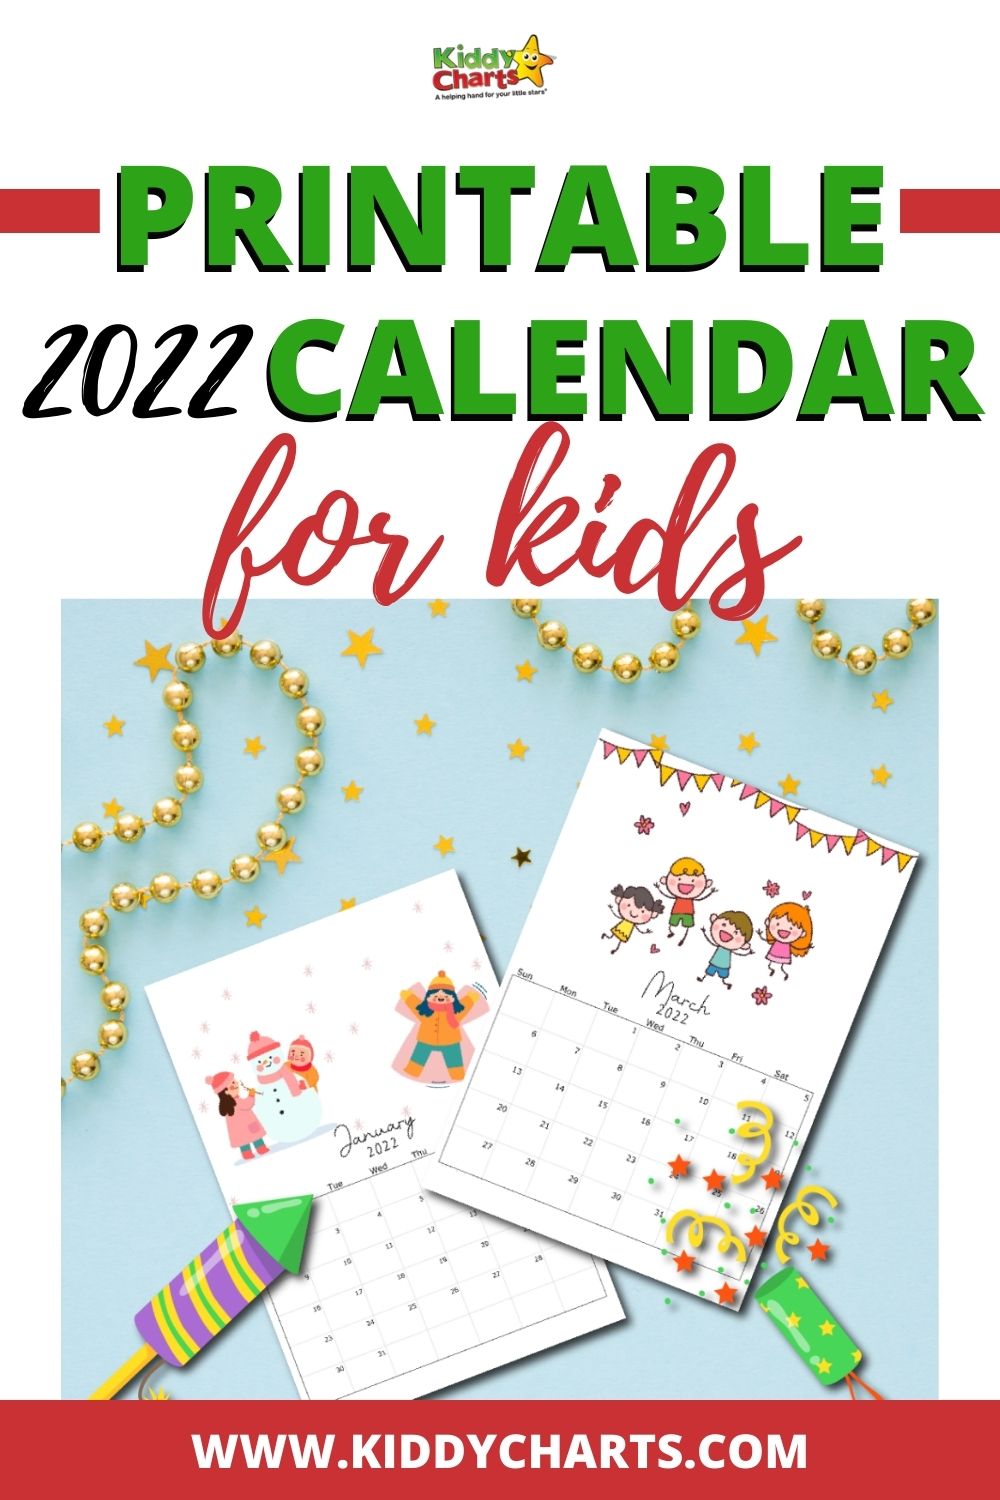 2022 Calendar thats Printable Kids - Monthly Snapshots - kiddycharts.com